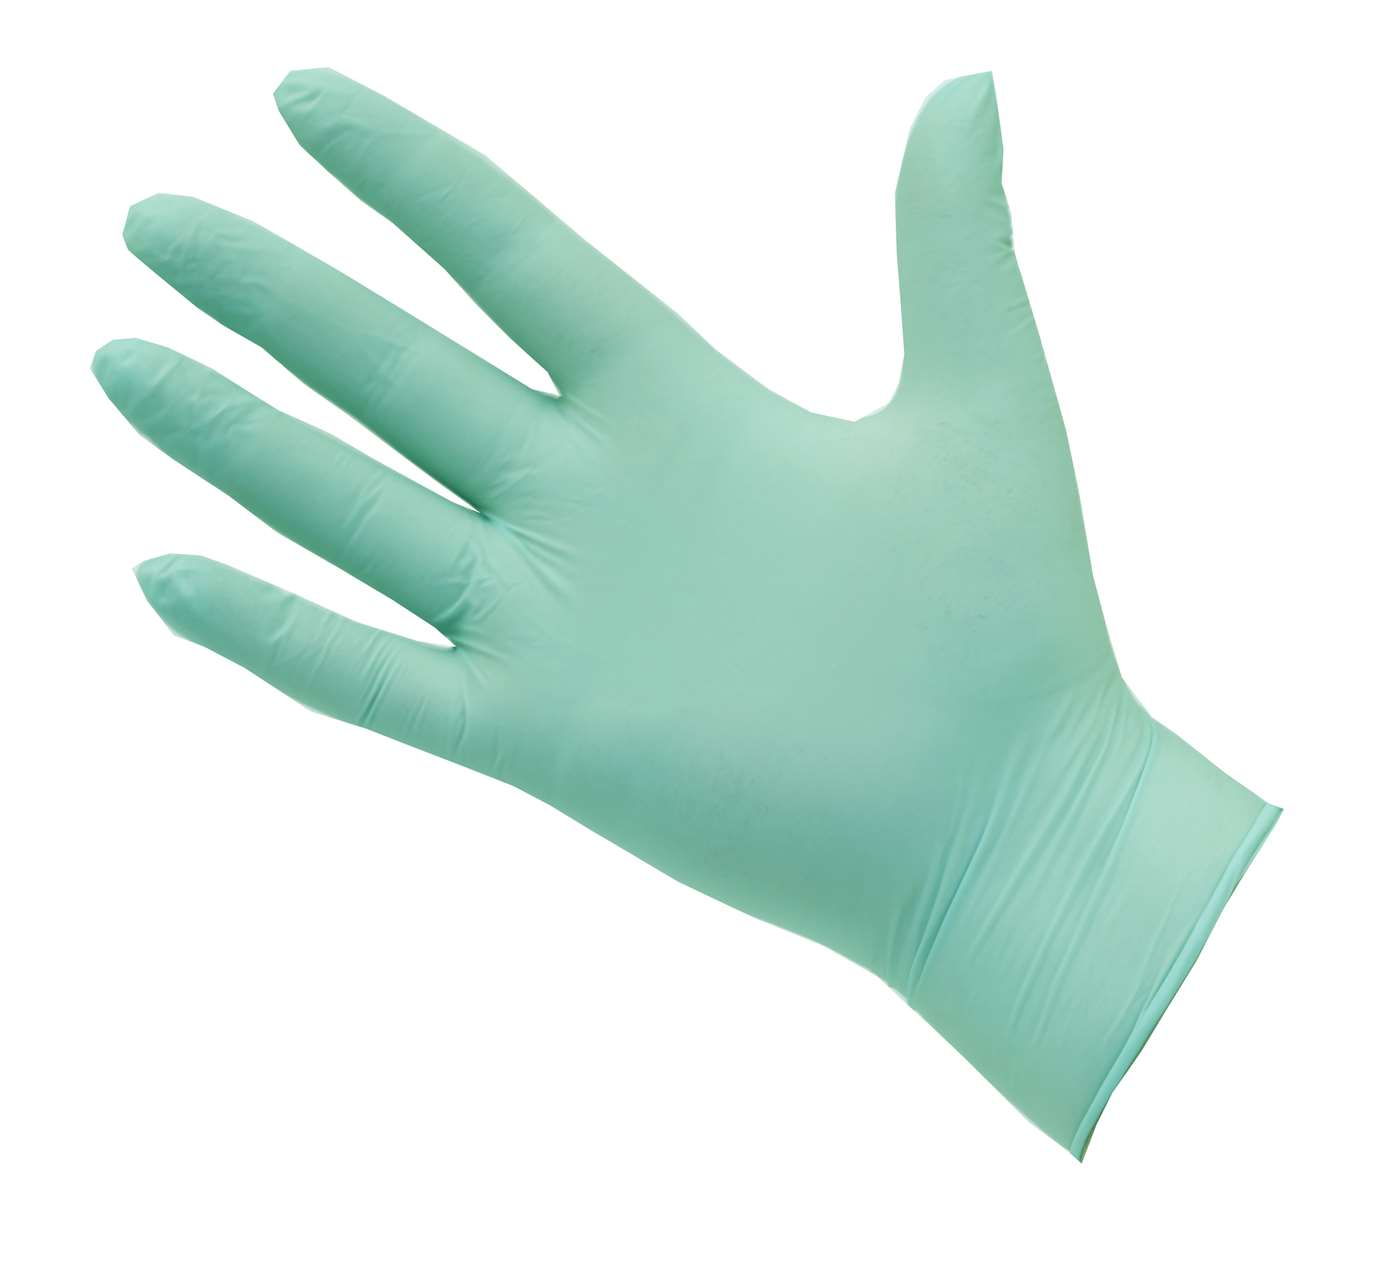 Agenda Pro UltraFlex Eco Green Nitrile Powder-free Gloves Large